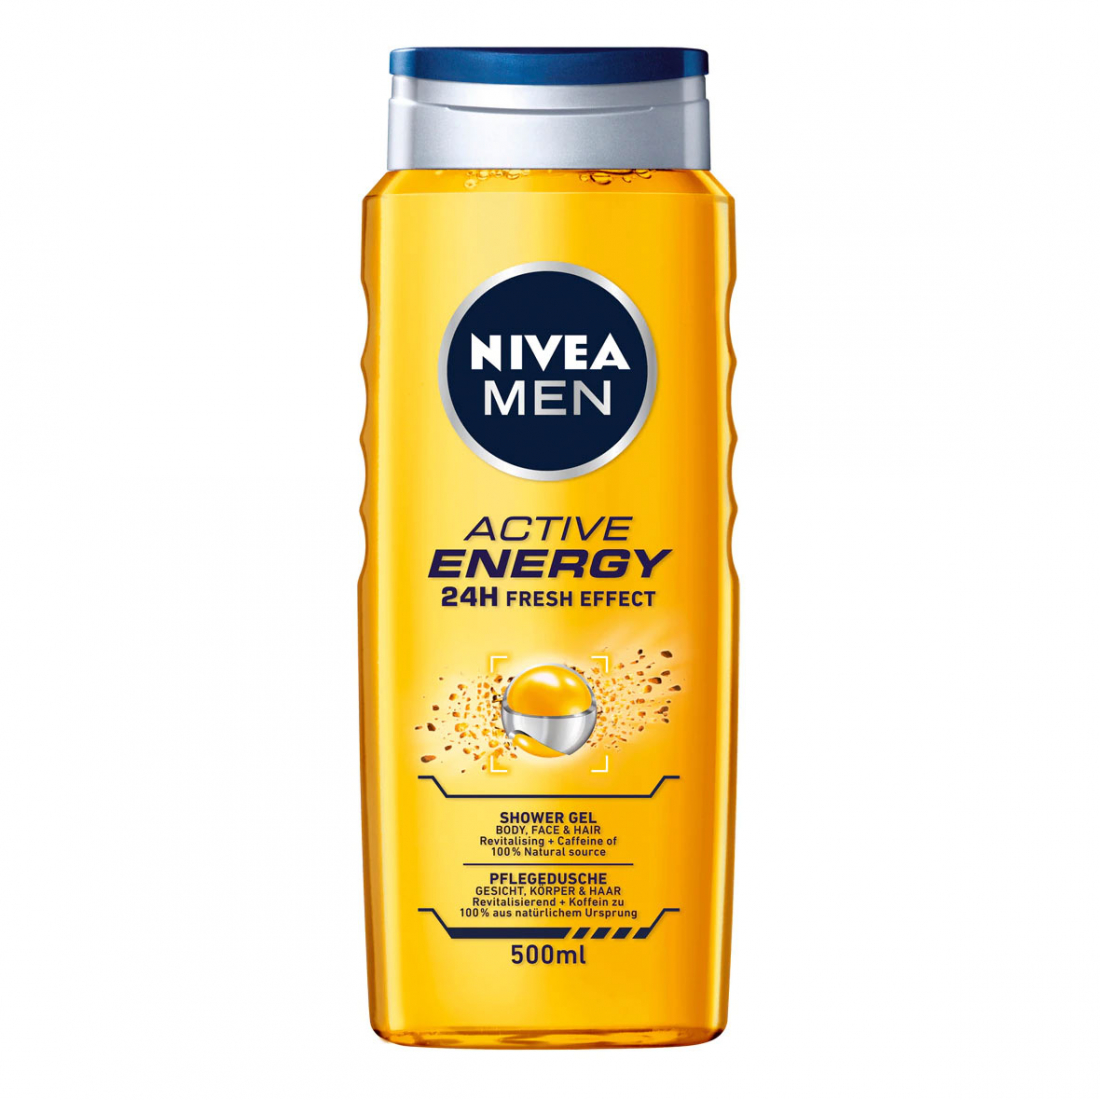 'Active Energy 24H Fresh Effect' Shower Gel - 500 ml